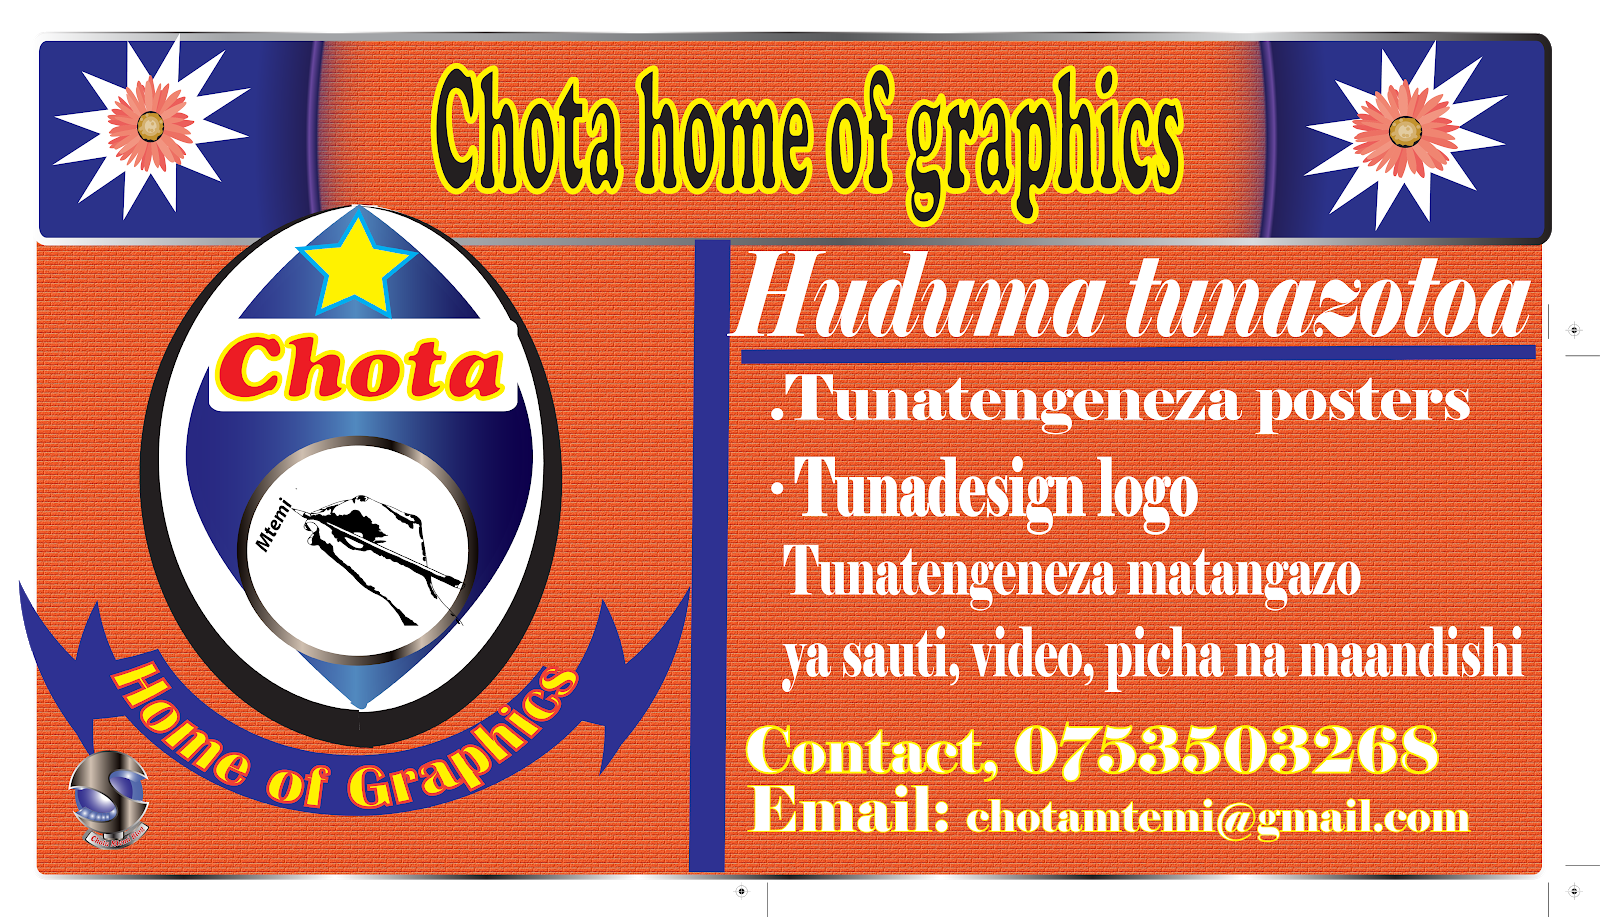 karibu chota home of graphics